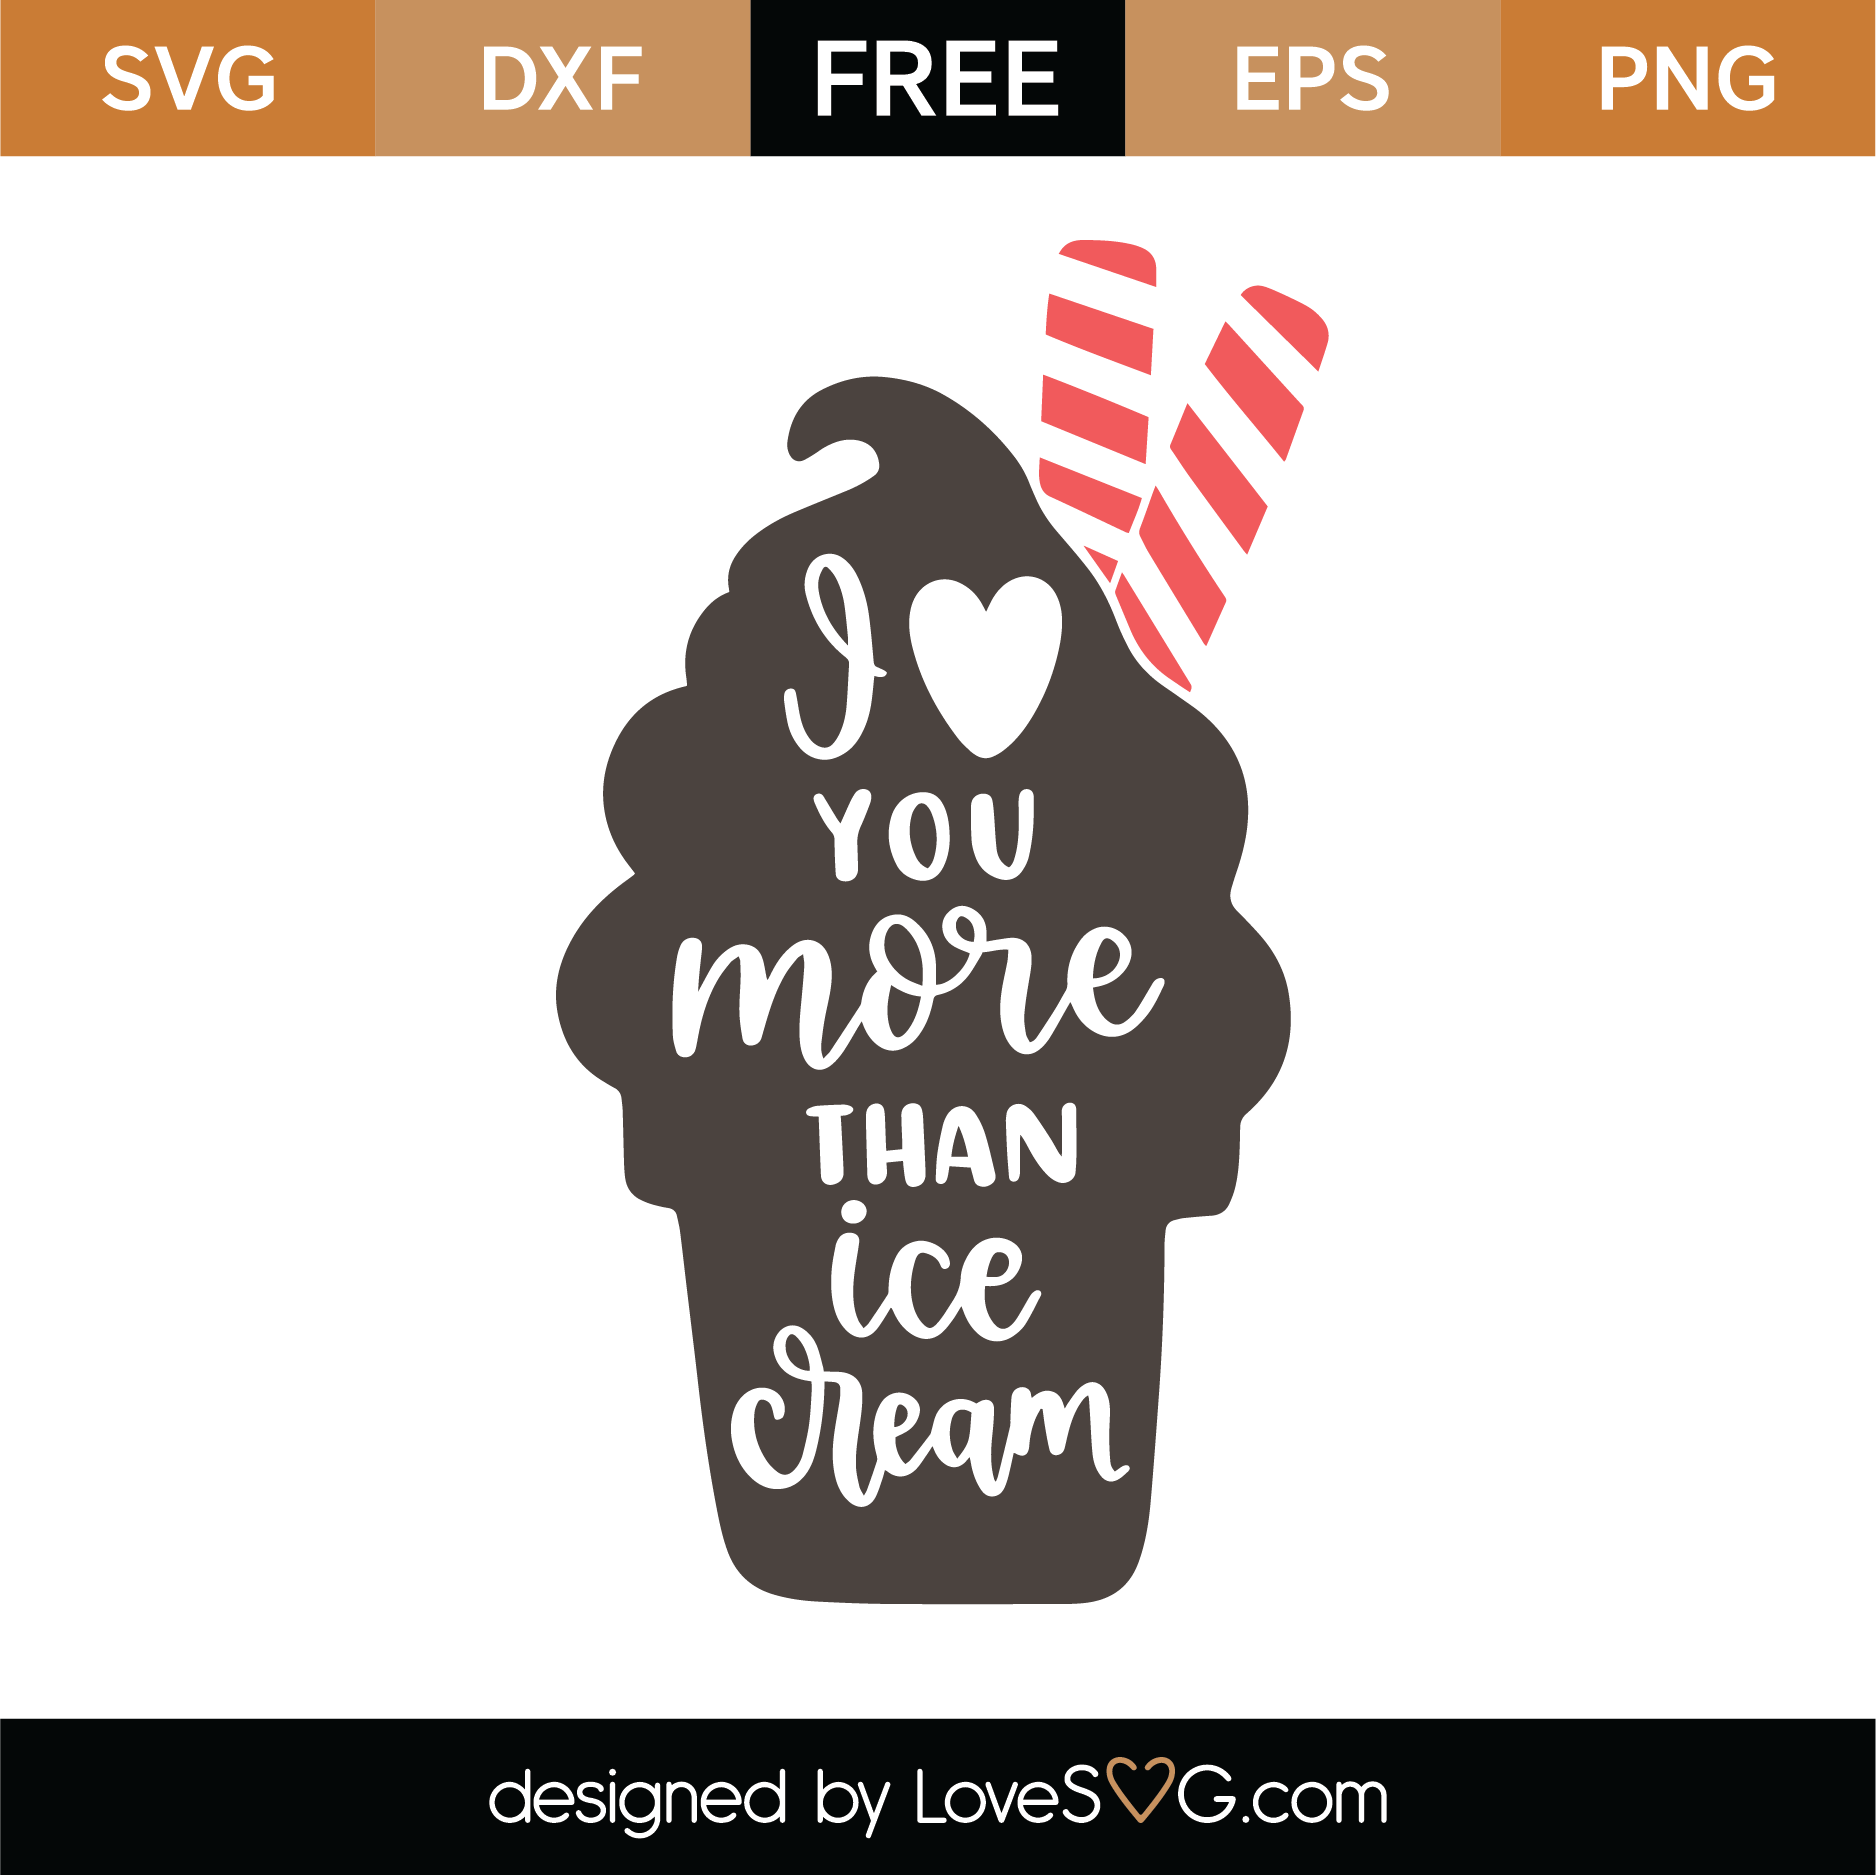 Download Free I Love You More Than Ice Cream SVG Cut File | Lovesvg.com